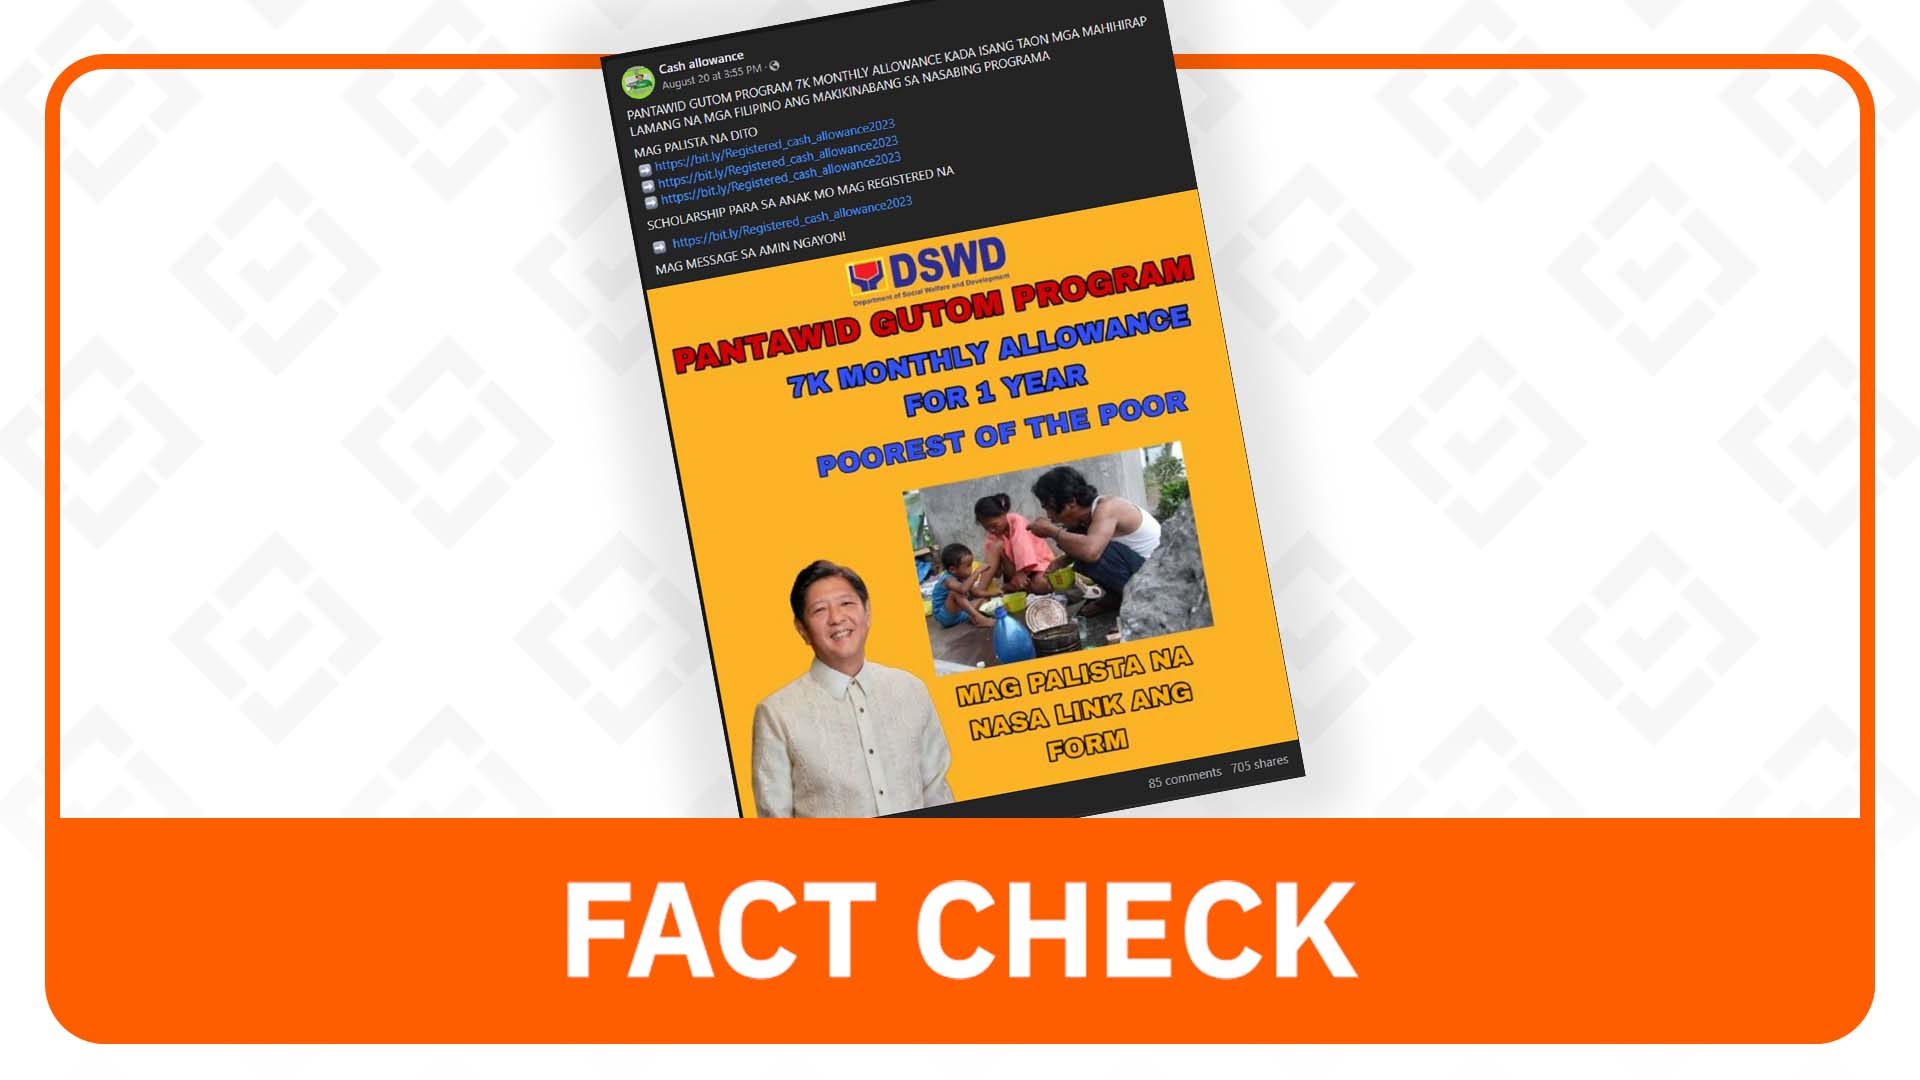 FACT CHECK: DSWD has no ‘Pantawid Gutom Program’